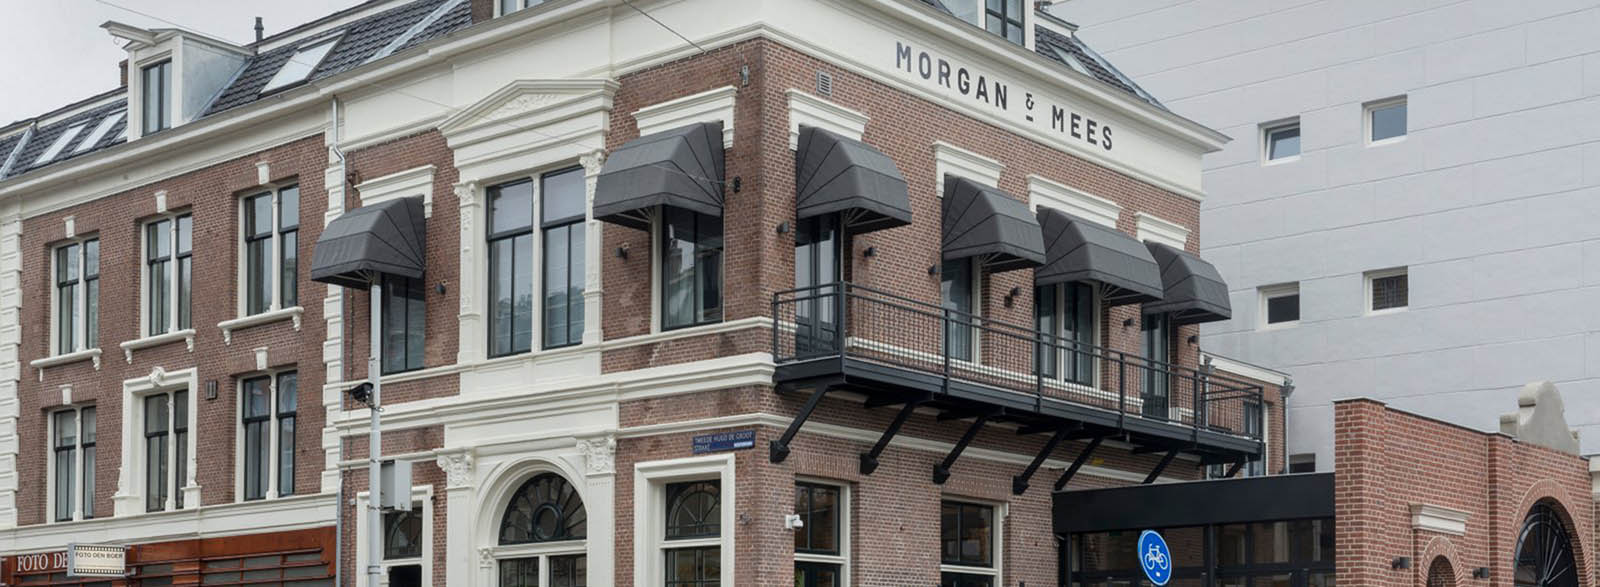 Morgan & Mees, Amsterdam